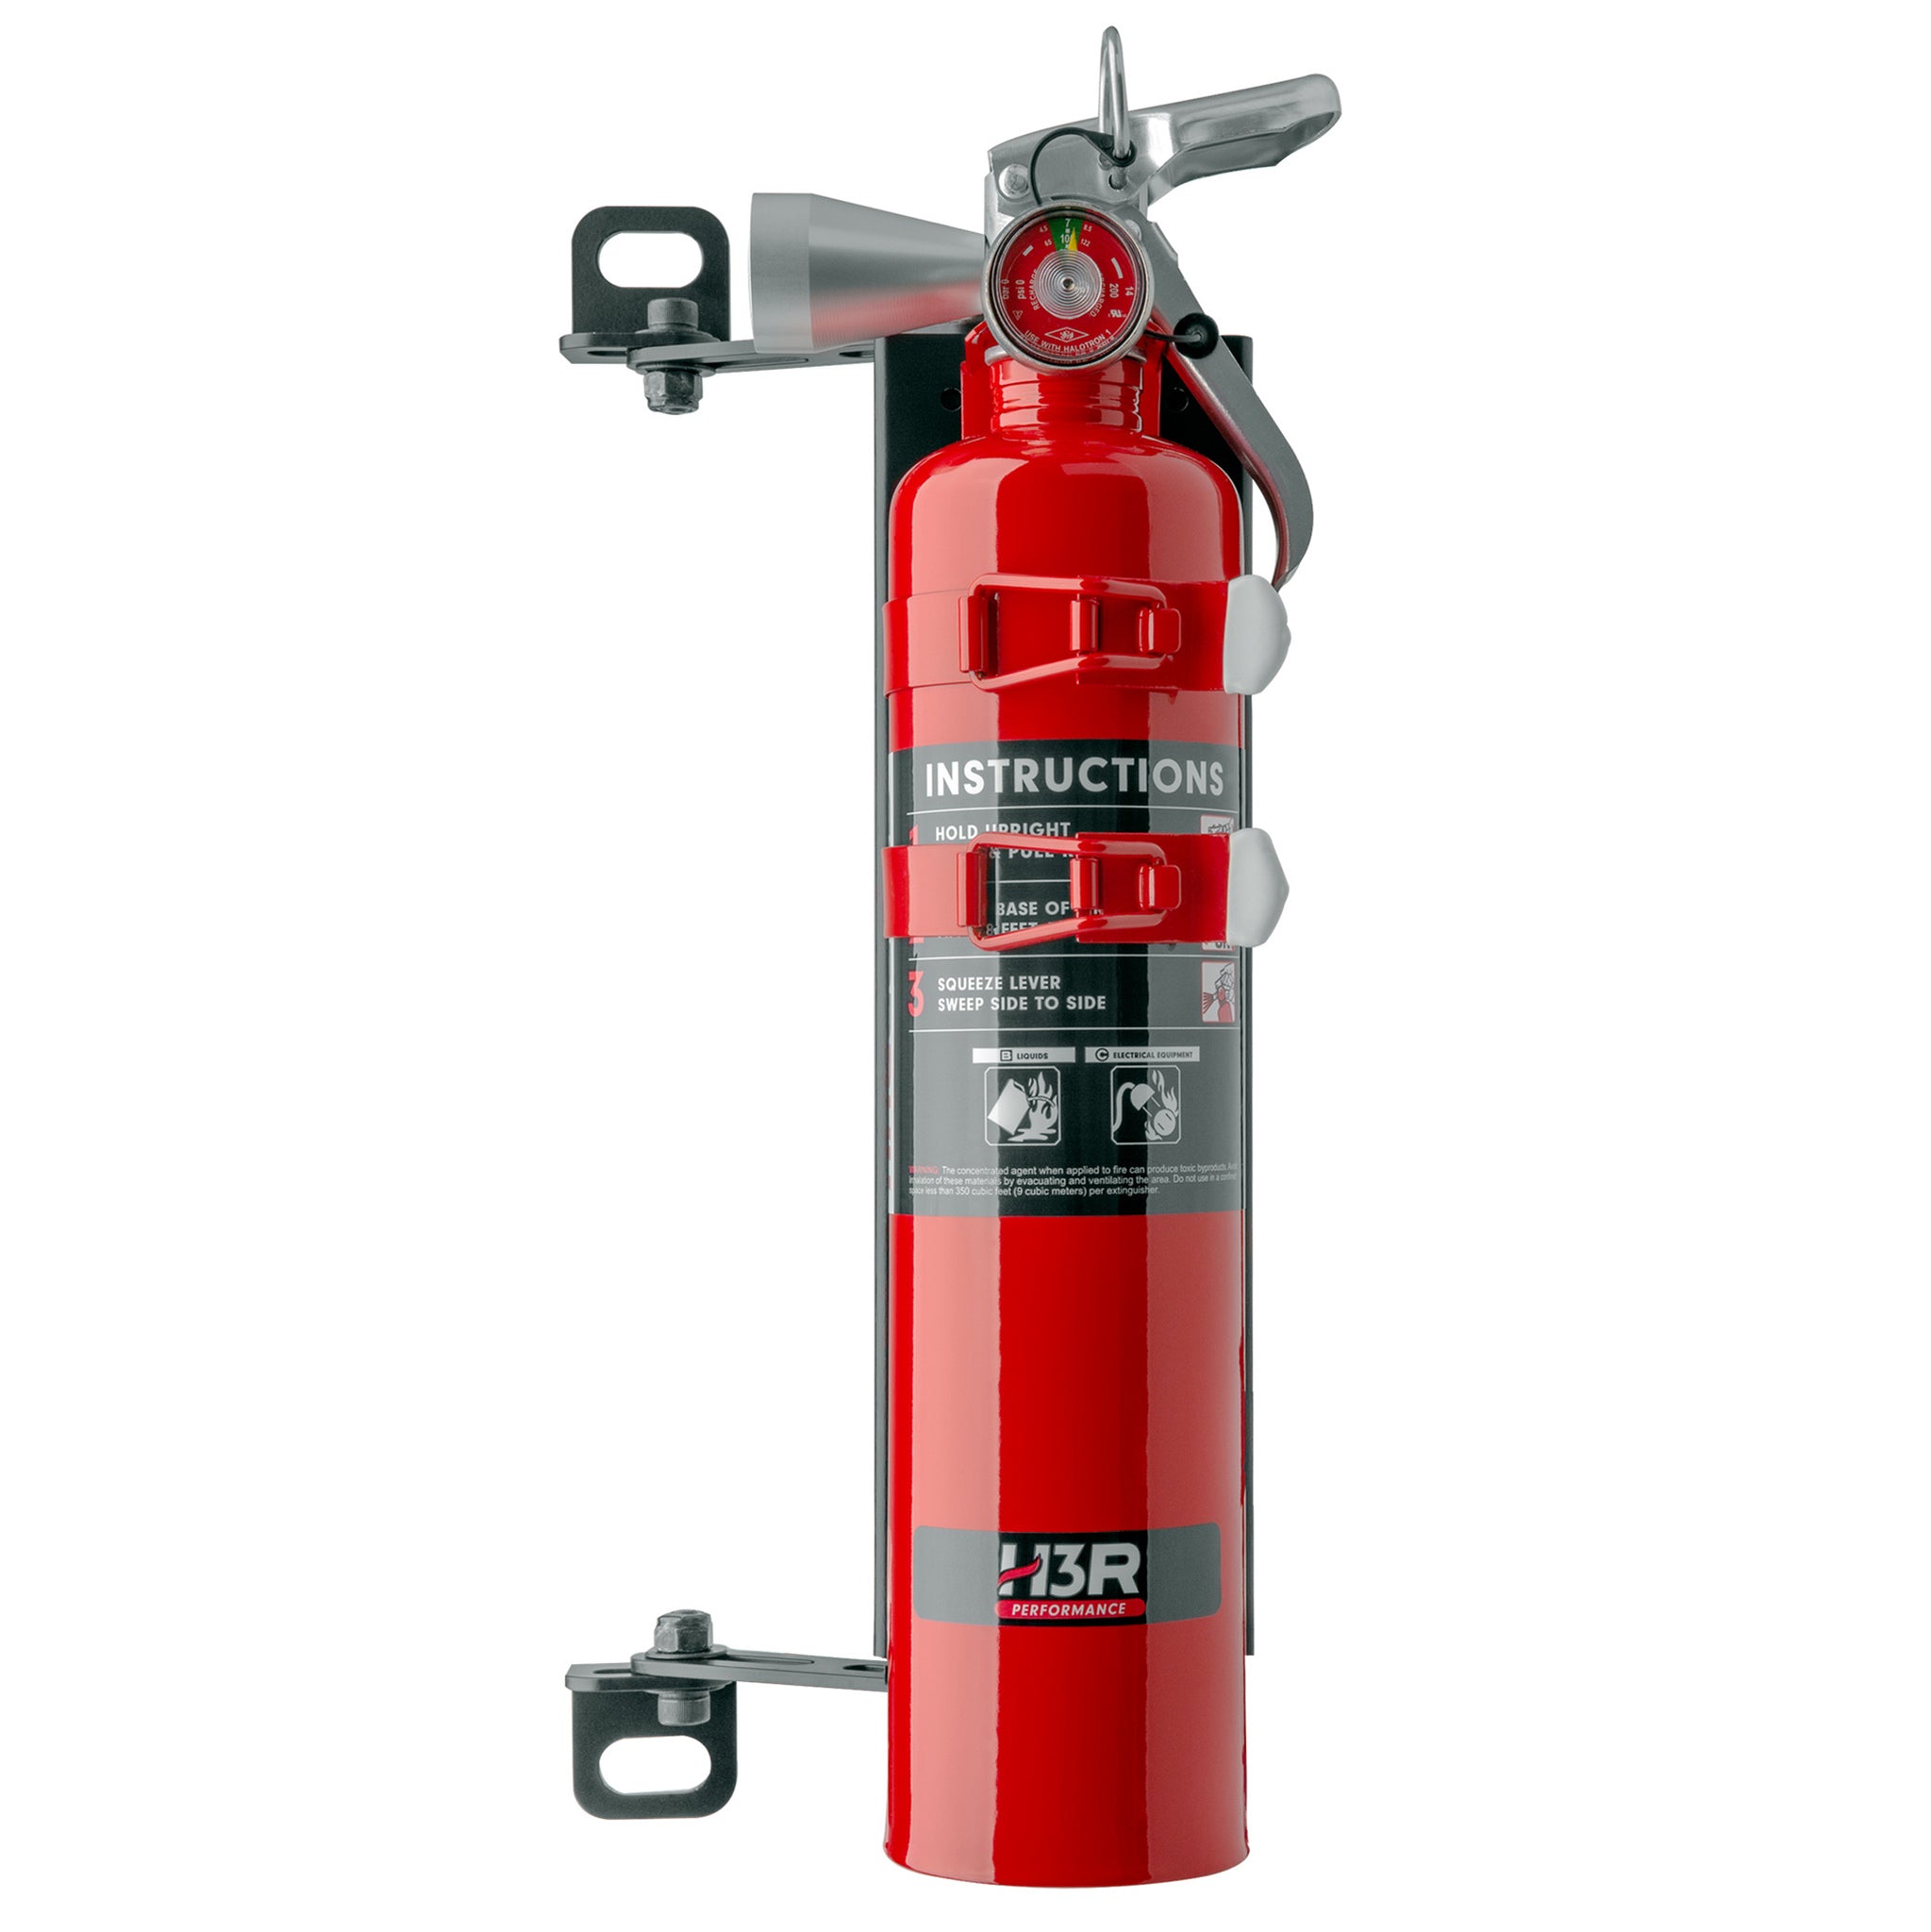 SM01BK - Fire Extinguisher Seat Mount